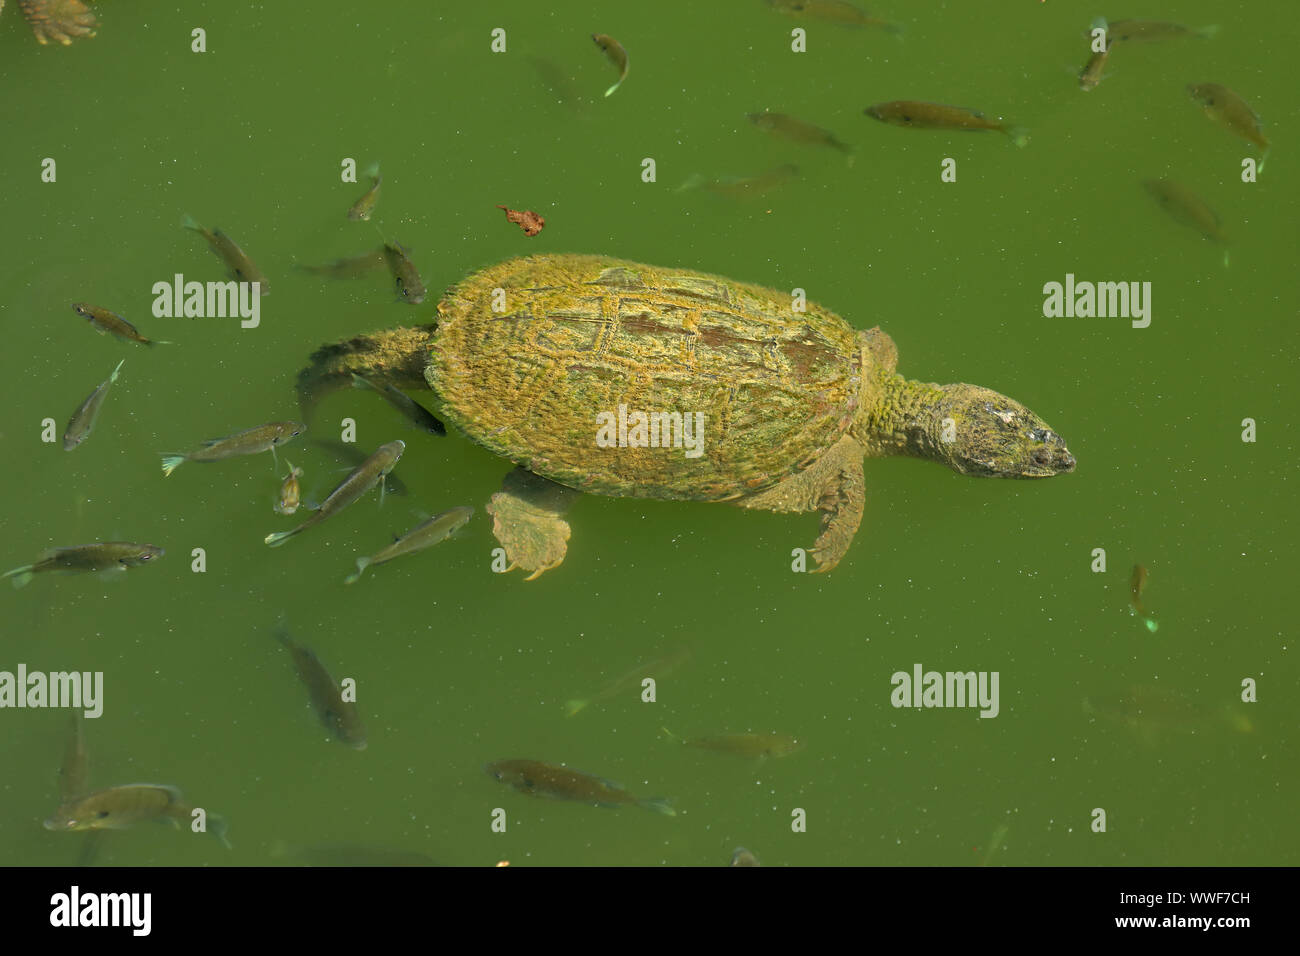 snapping turtle, Chelydra serpentina, and bluegills, Lepomis macrochirus, feeding on the algae on turtle's carapace, Maryland Stock Photo